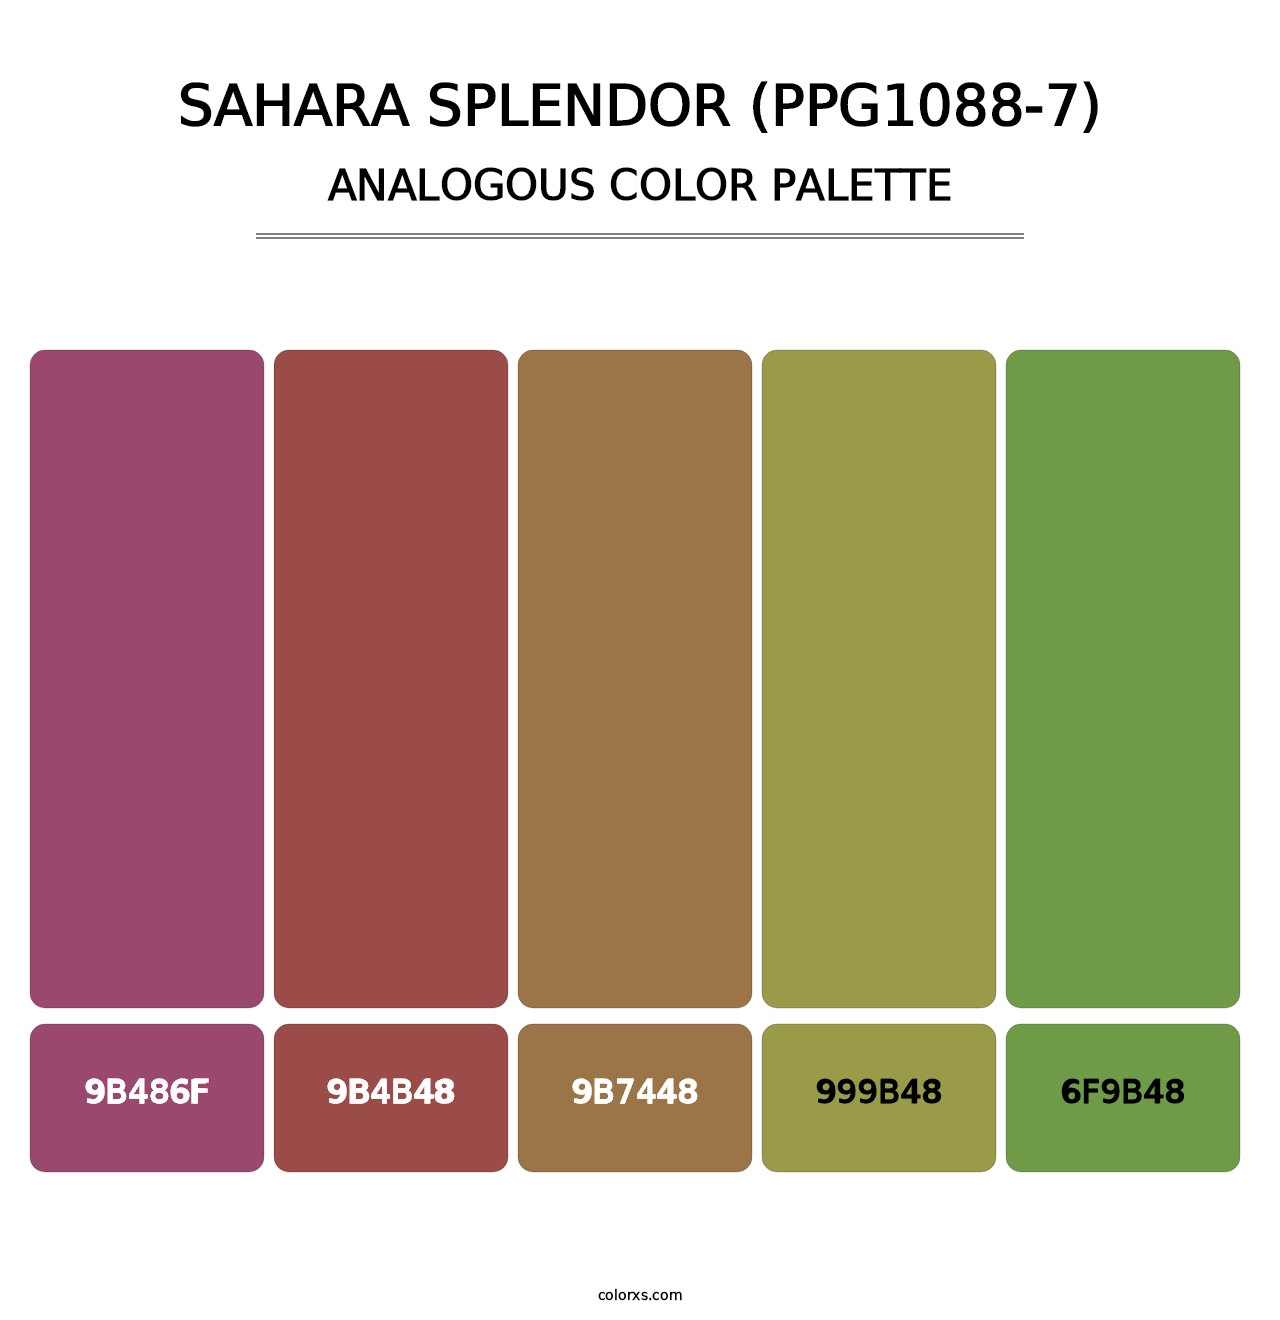 Sahara Splendor (PPG1088-7) - Analogous Color Palette